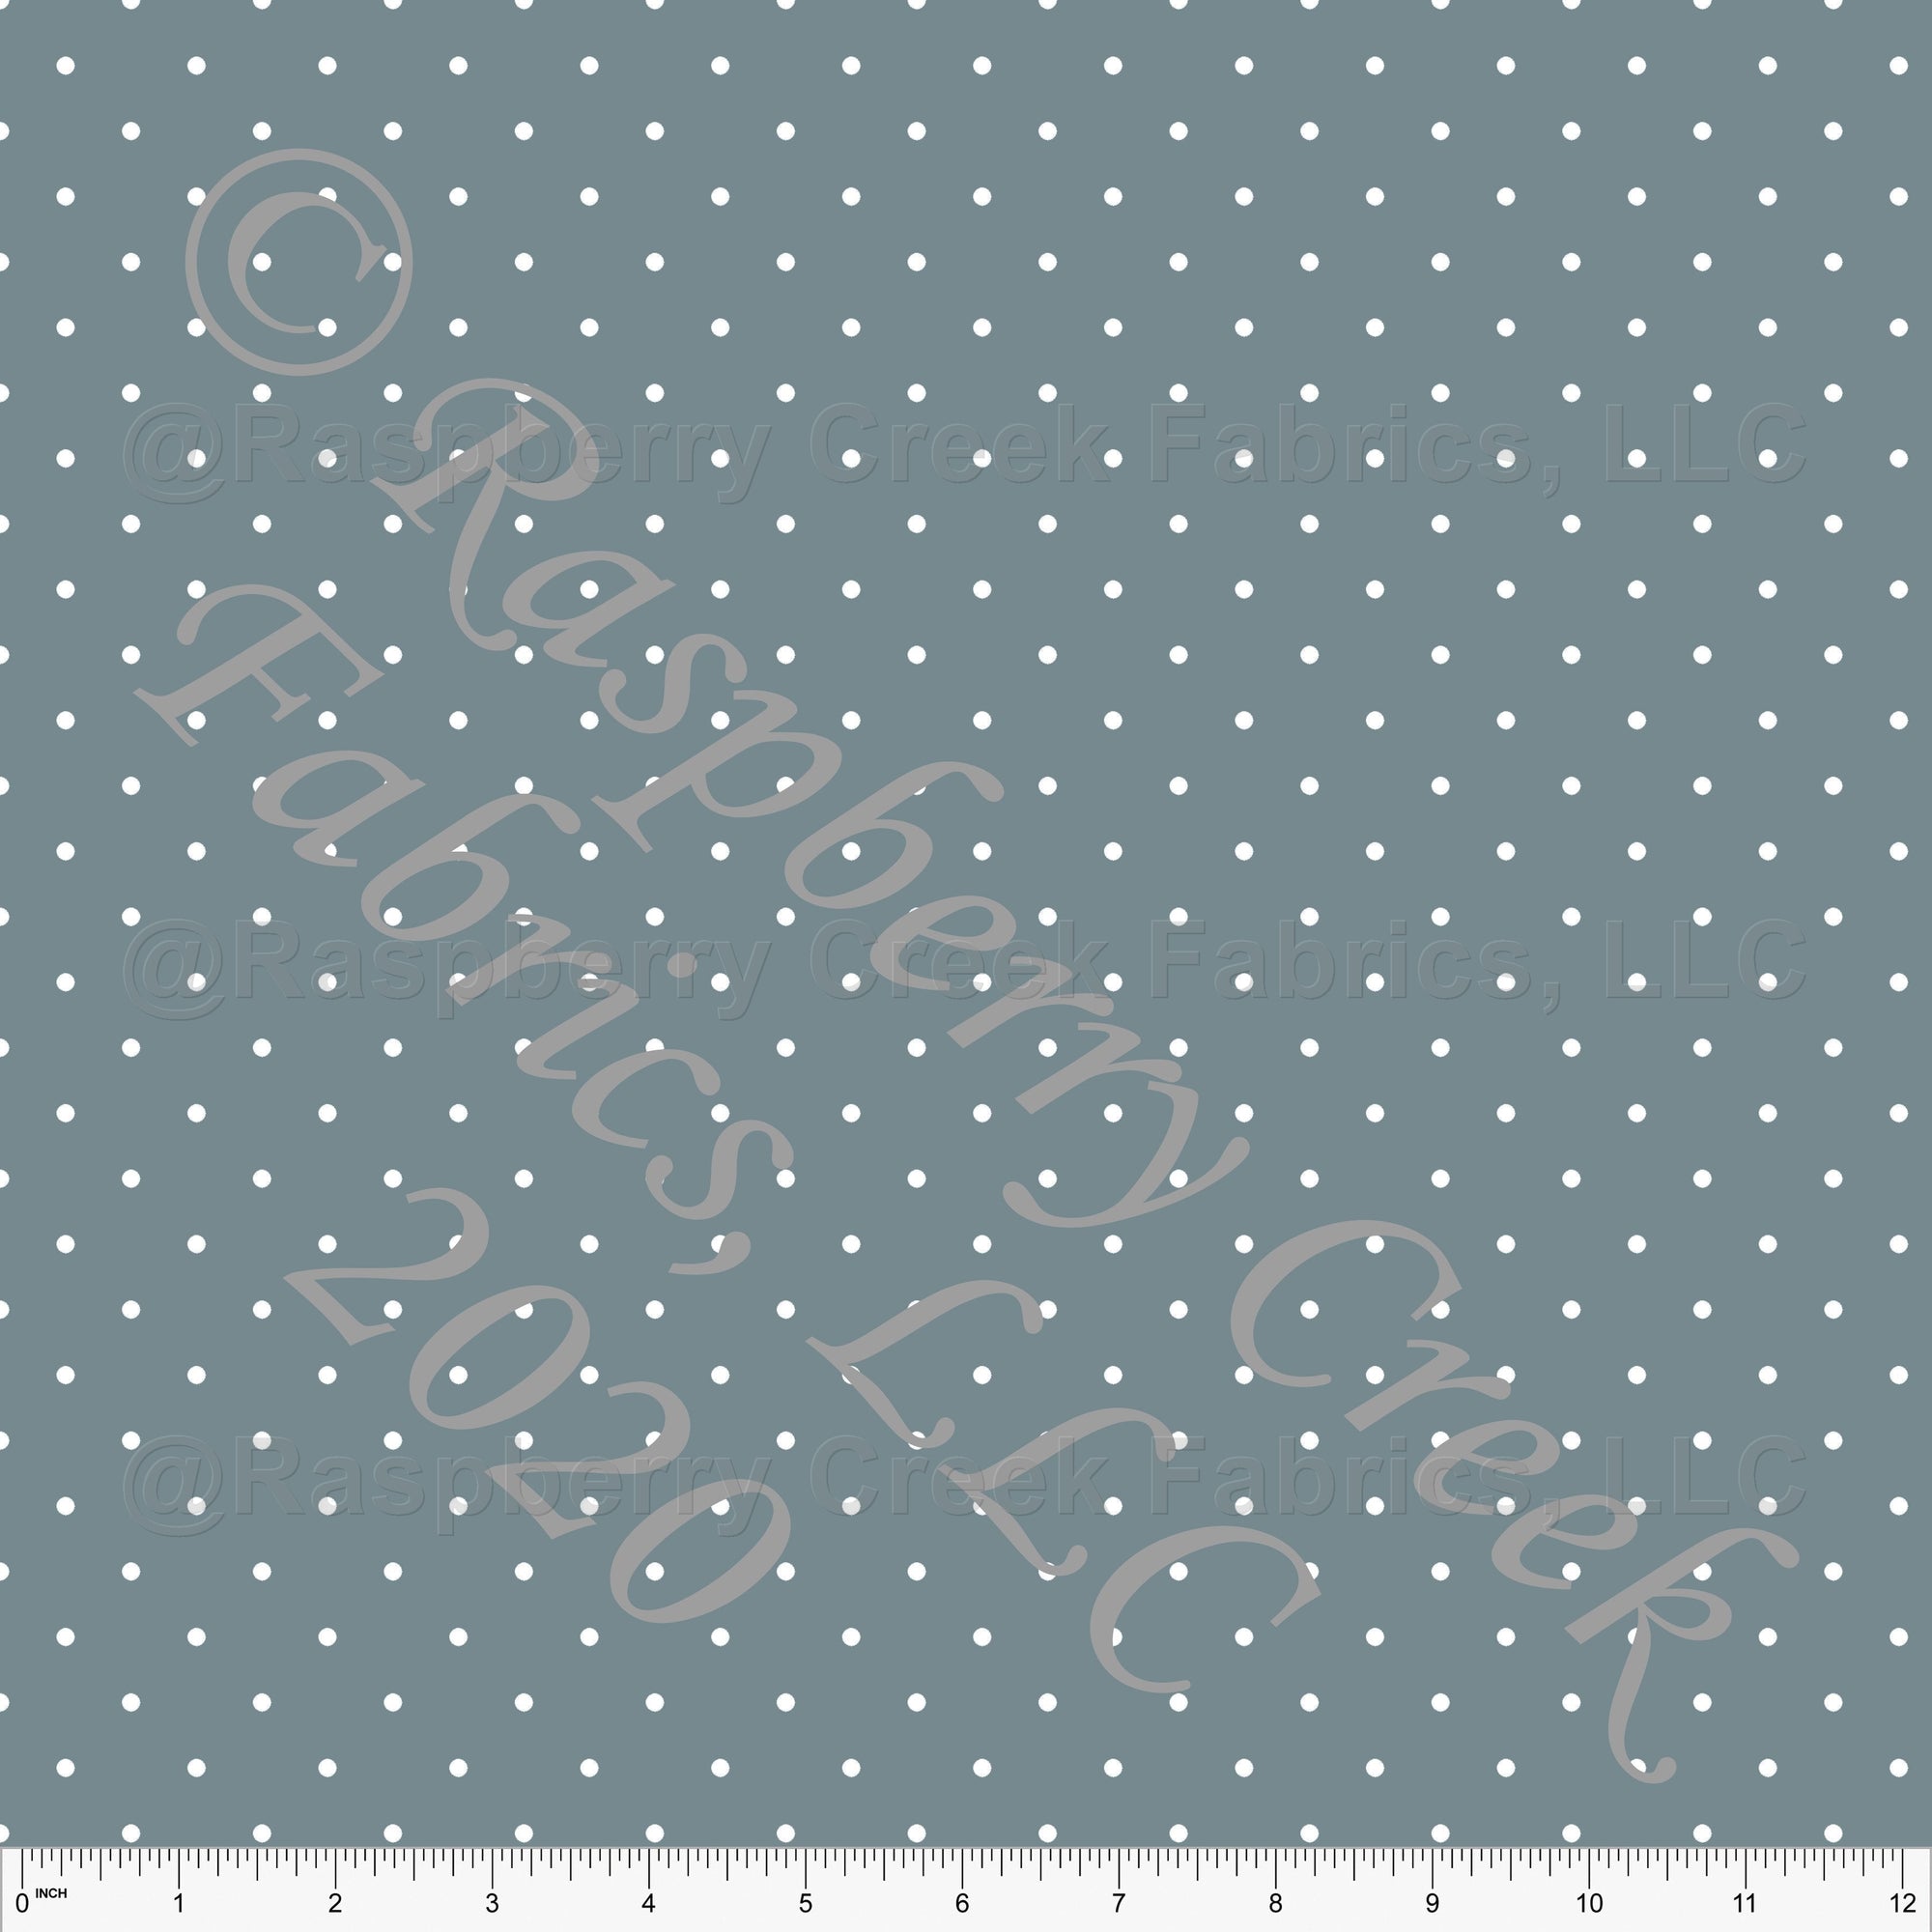 Dusty Blue and White Pin Dot, Basics for CLUB Fabrics Fabric, Raspberry Creek Fabrics, watermarked